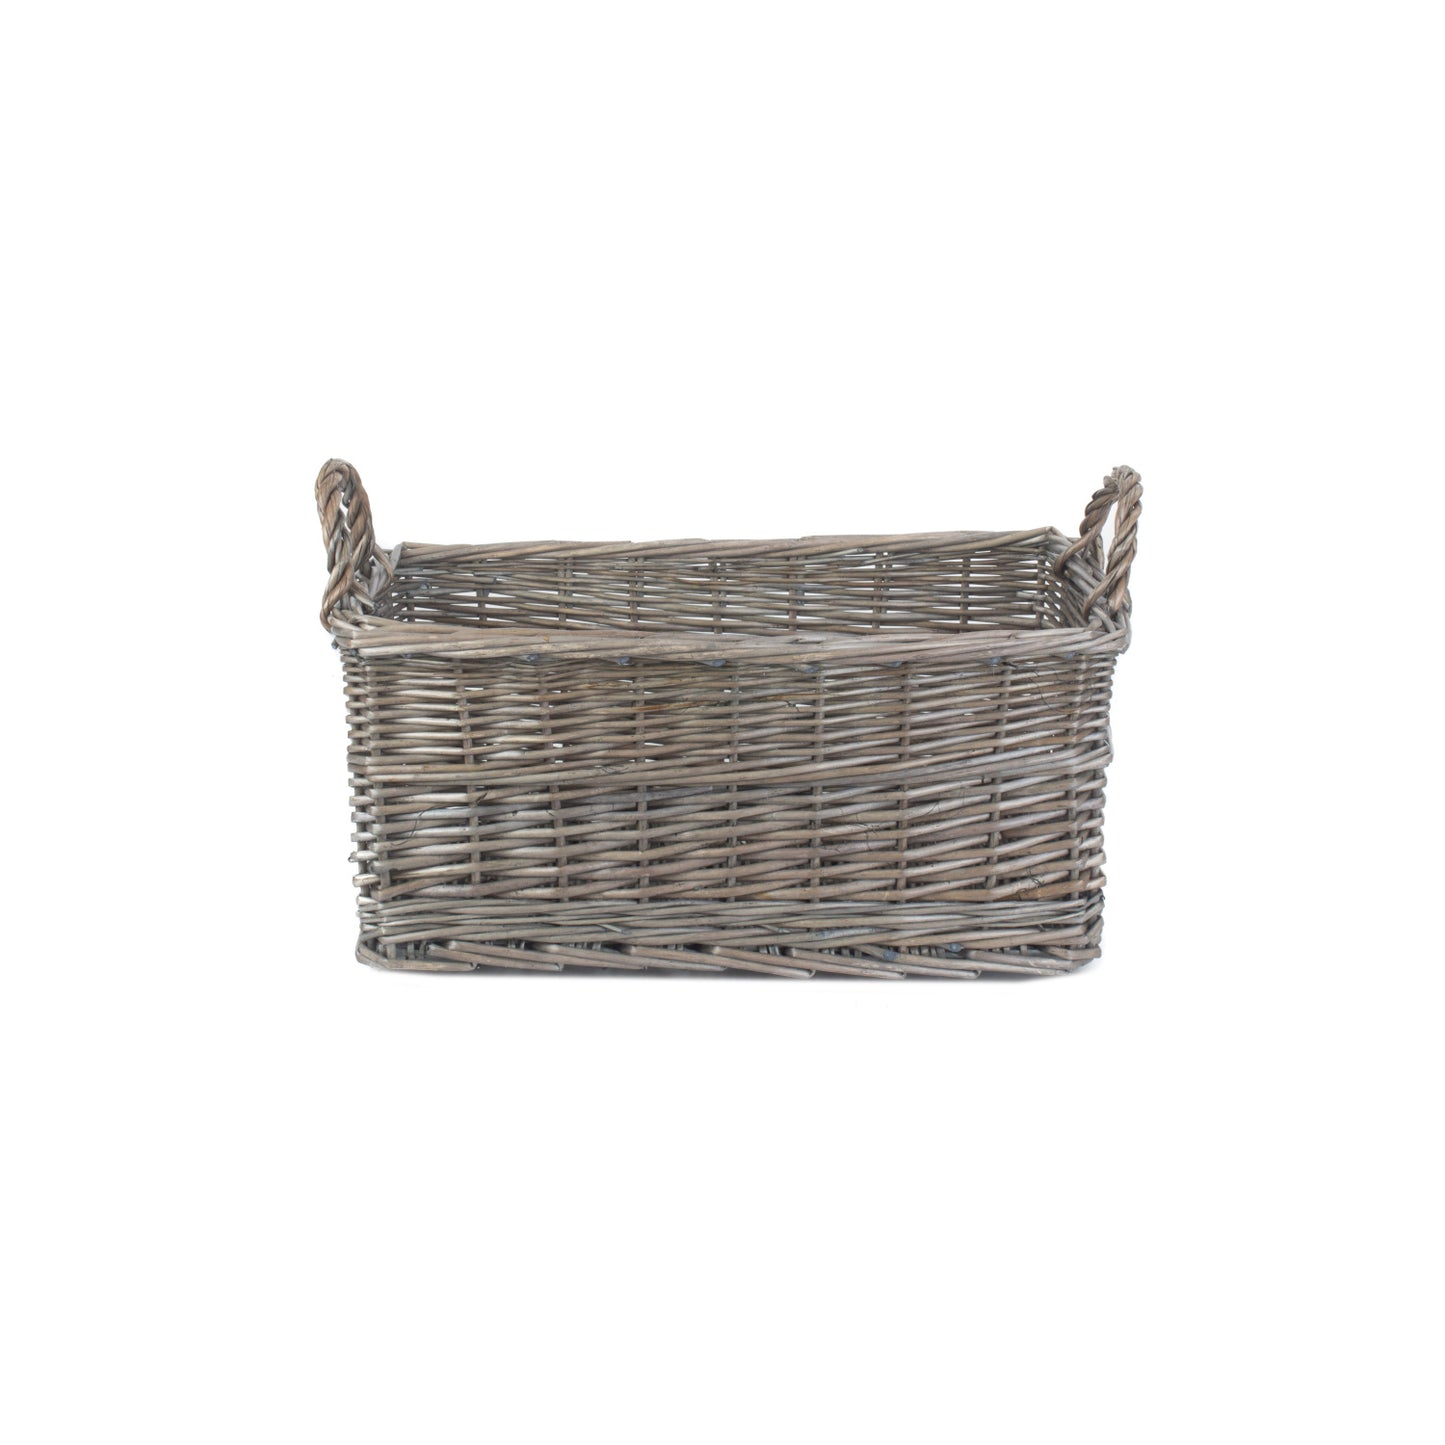 Small Shallow Antique Wash Storage Basket